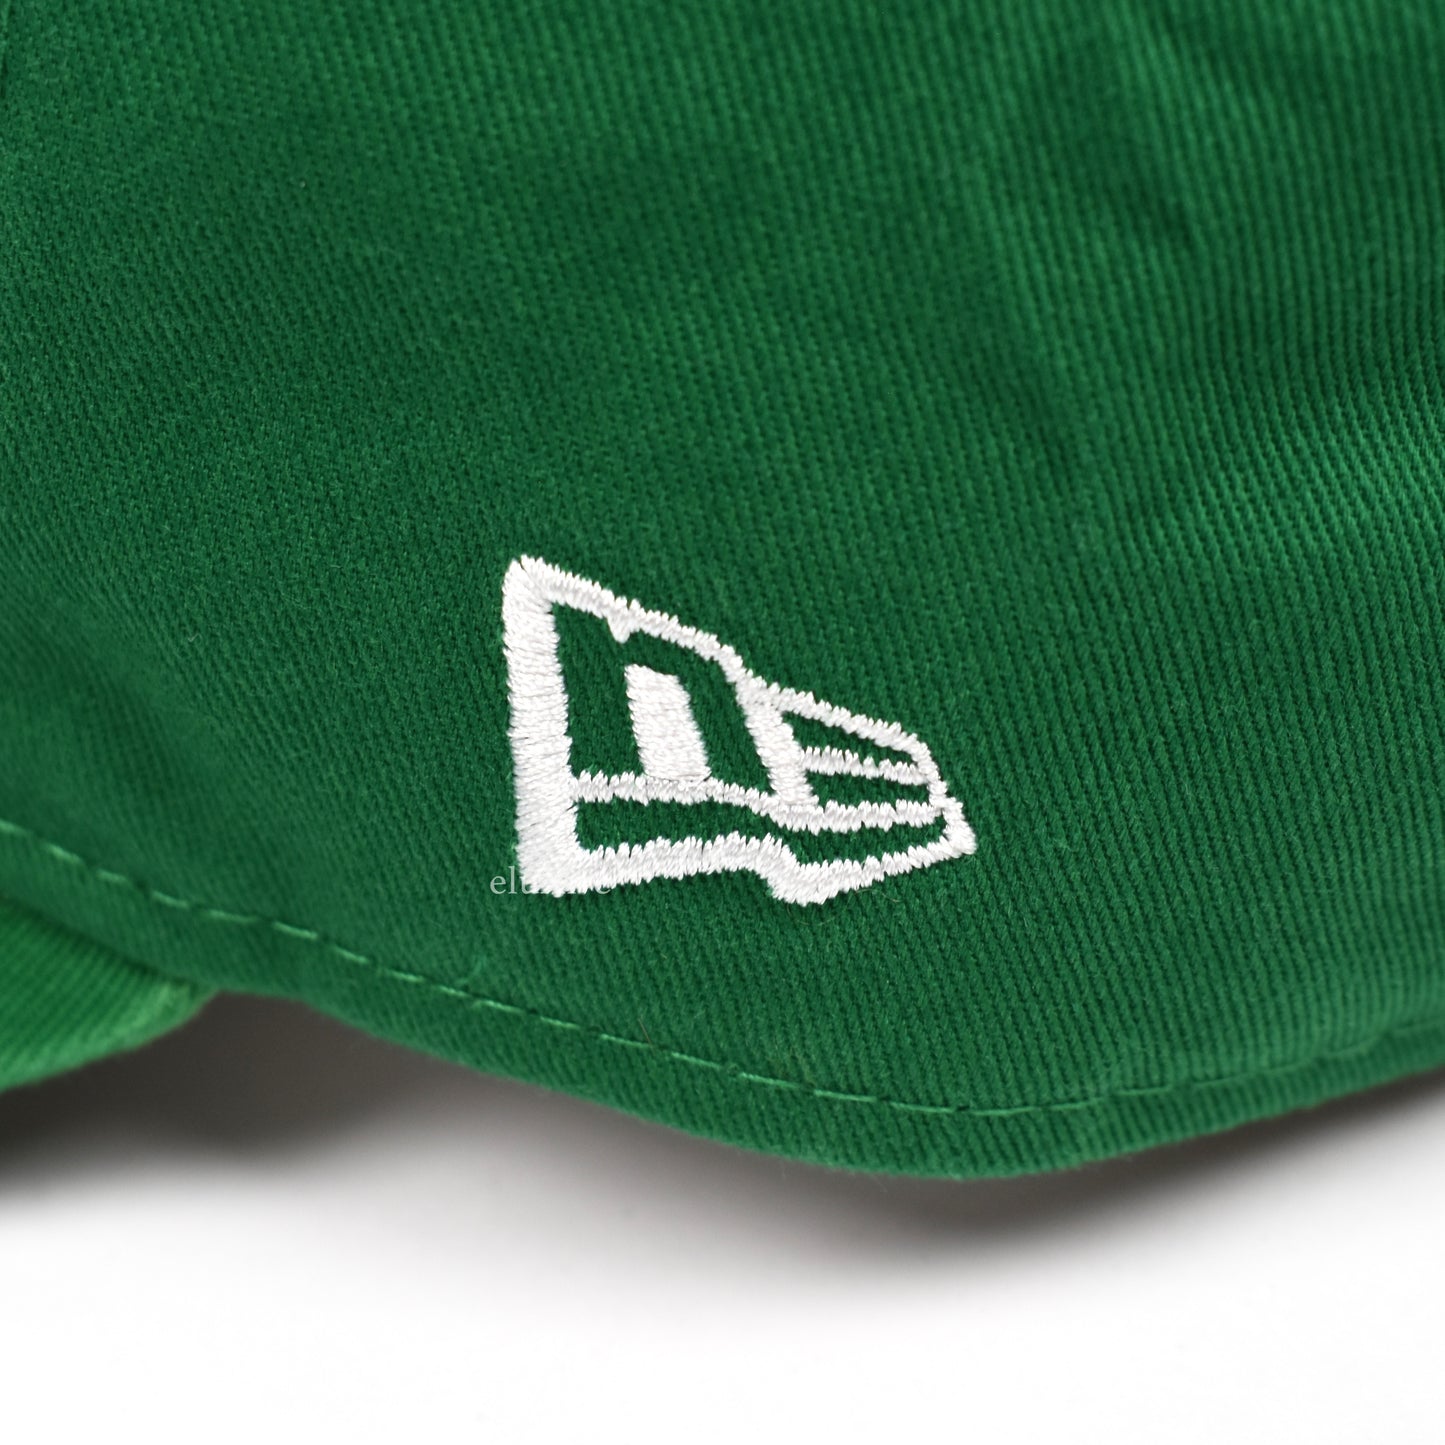 New Era - MoMA Edition Yankees Adjustable Hat (Green)